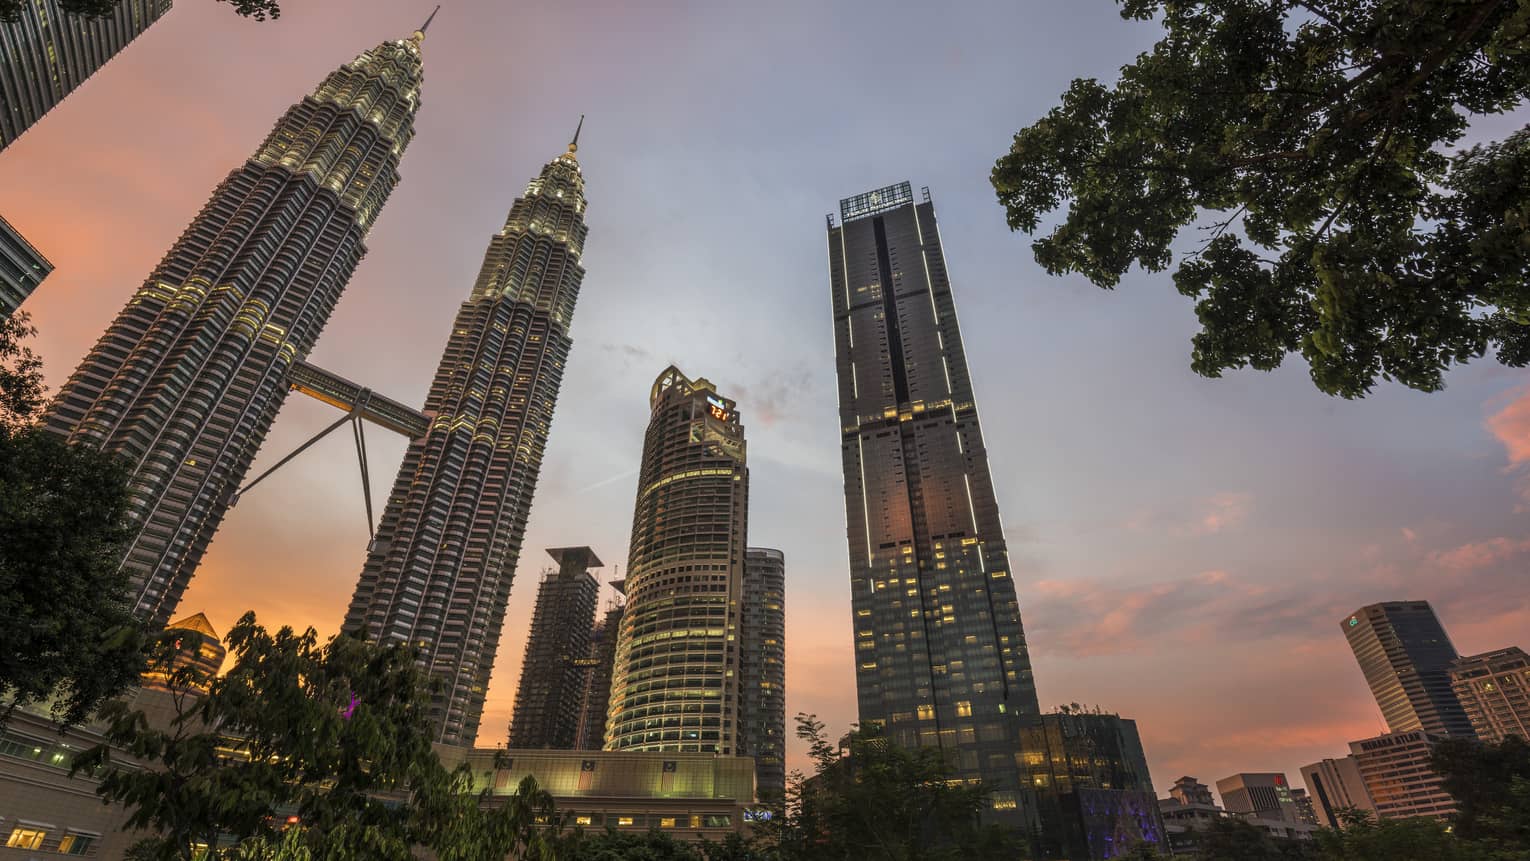 Four Seasons Hotel Kuala Lumpur against the sunset with the city skyline